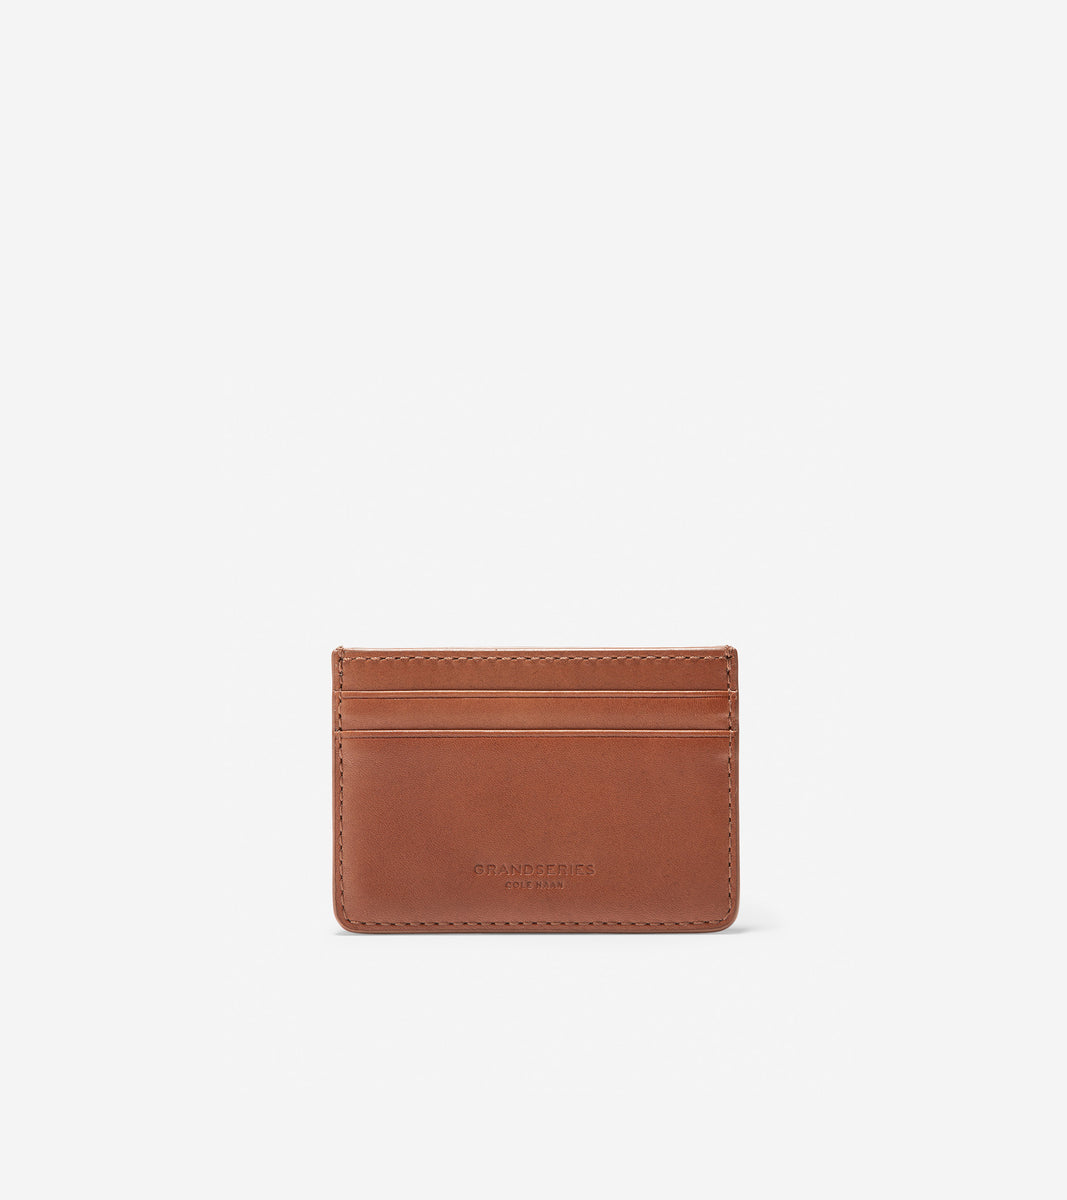 ColeHaan-GRANDSERIES Leather Card Case-f11437-British Tan